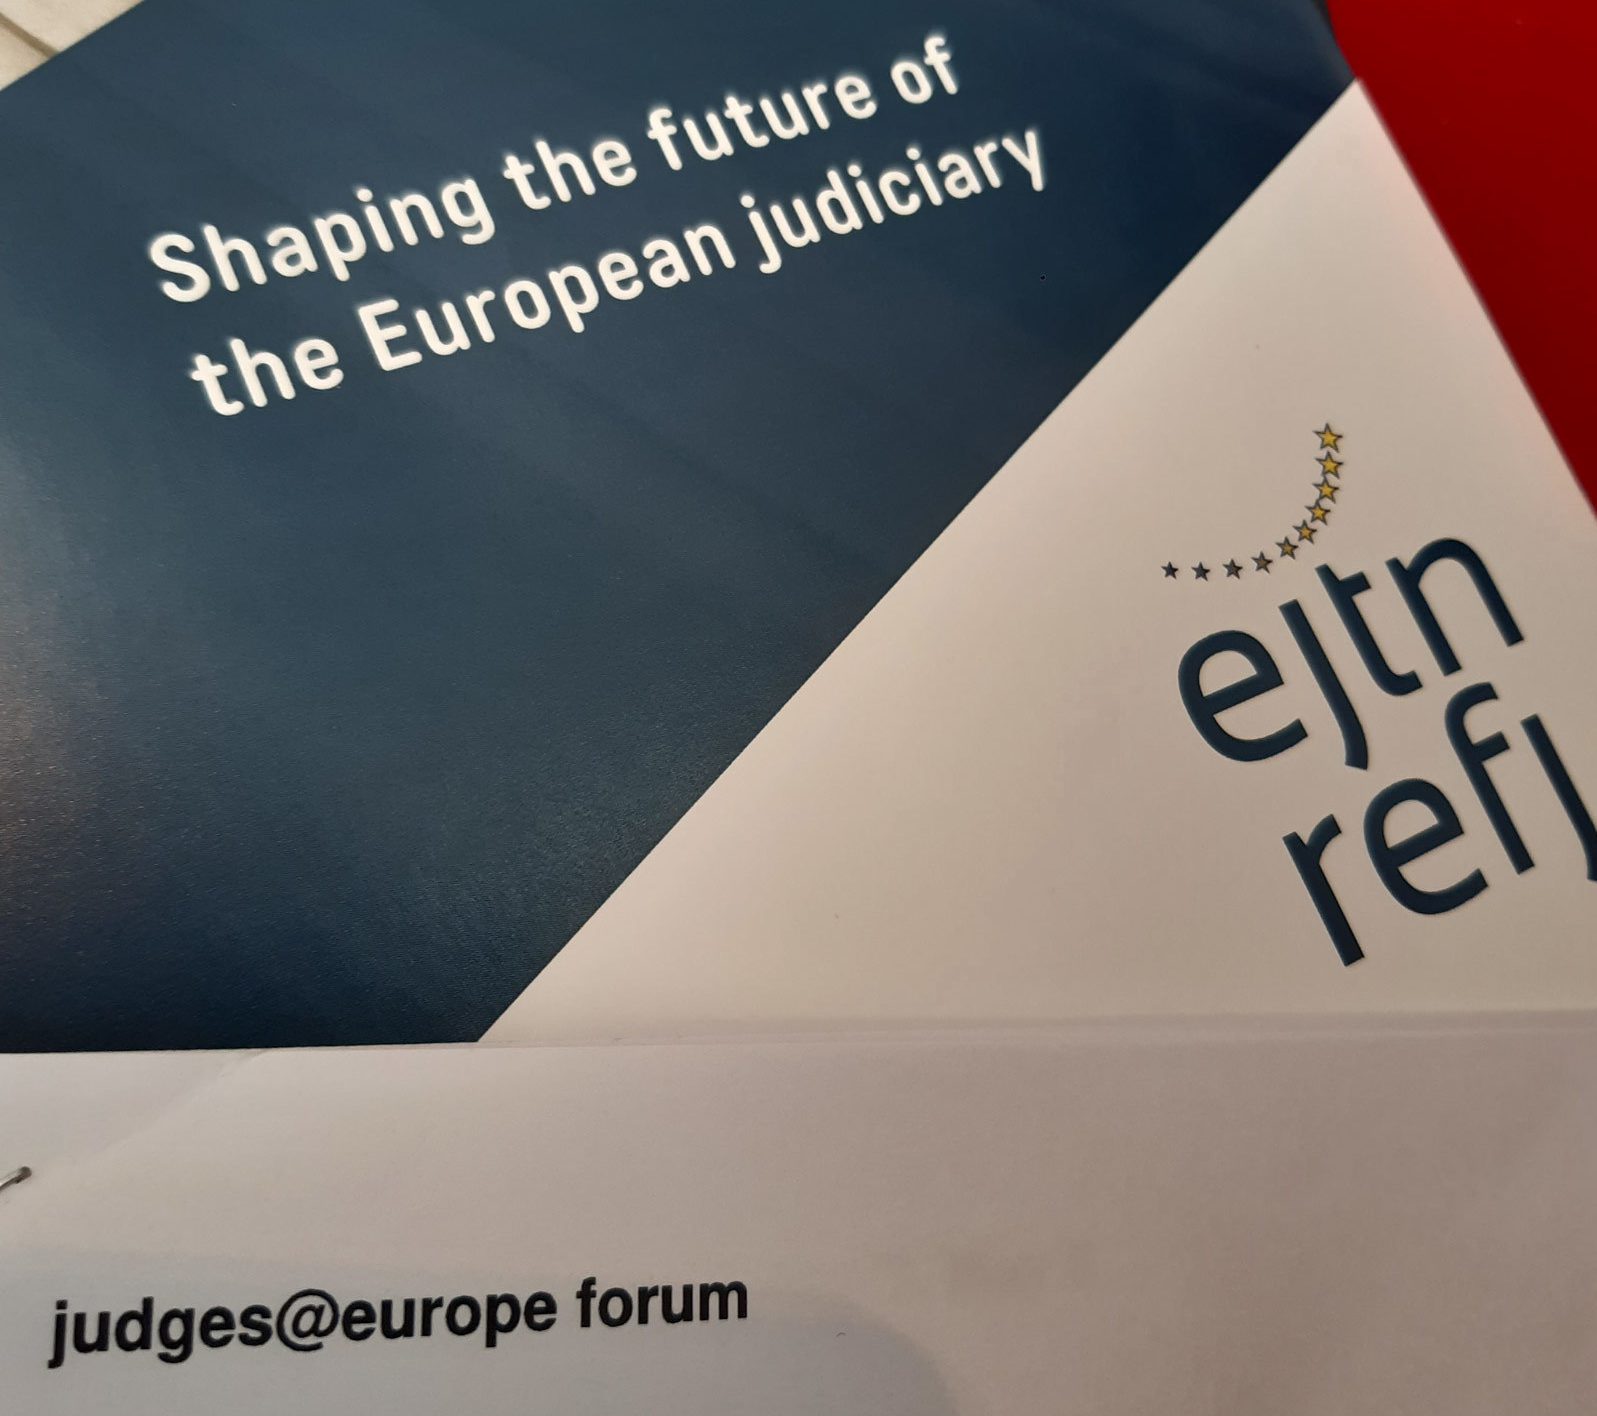 Shaping the future of the European judiciary